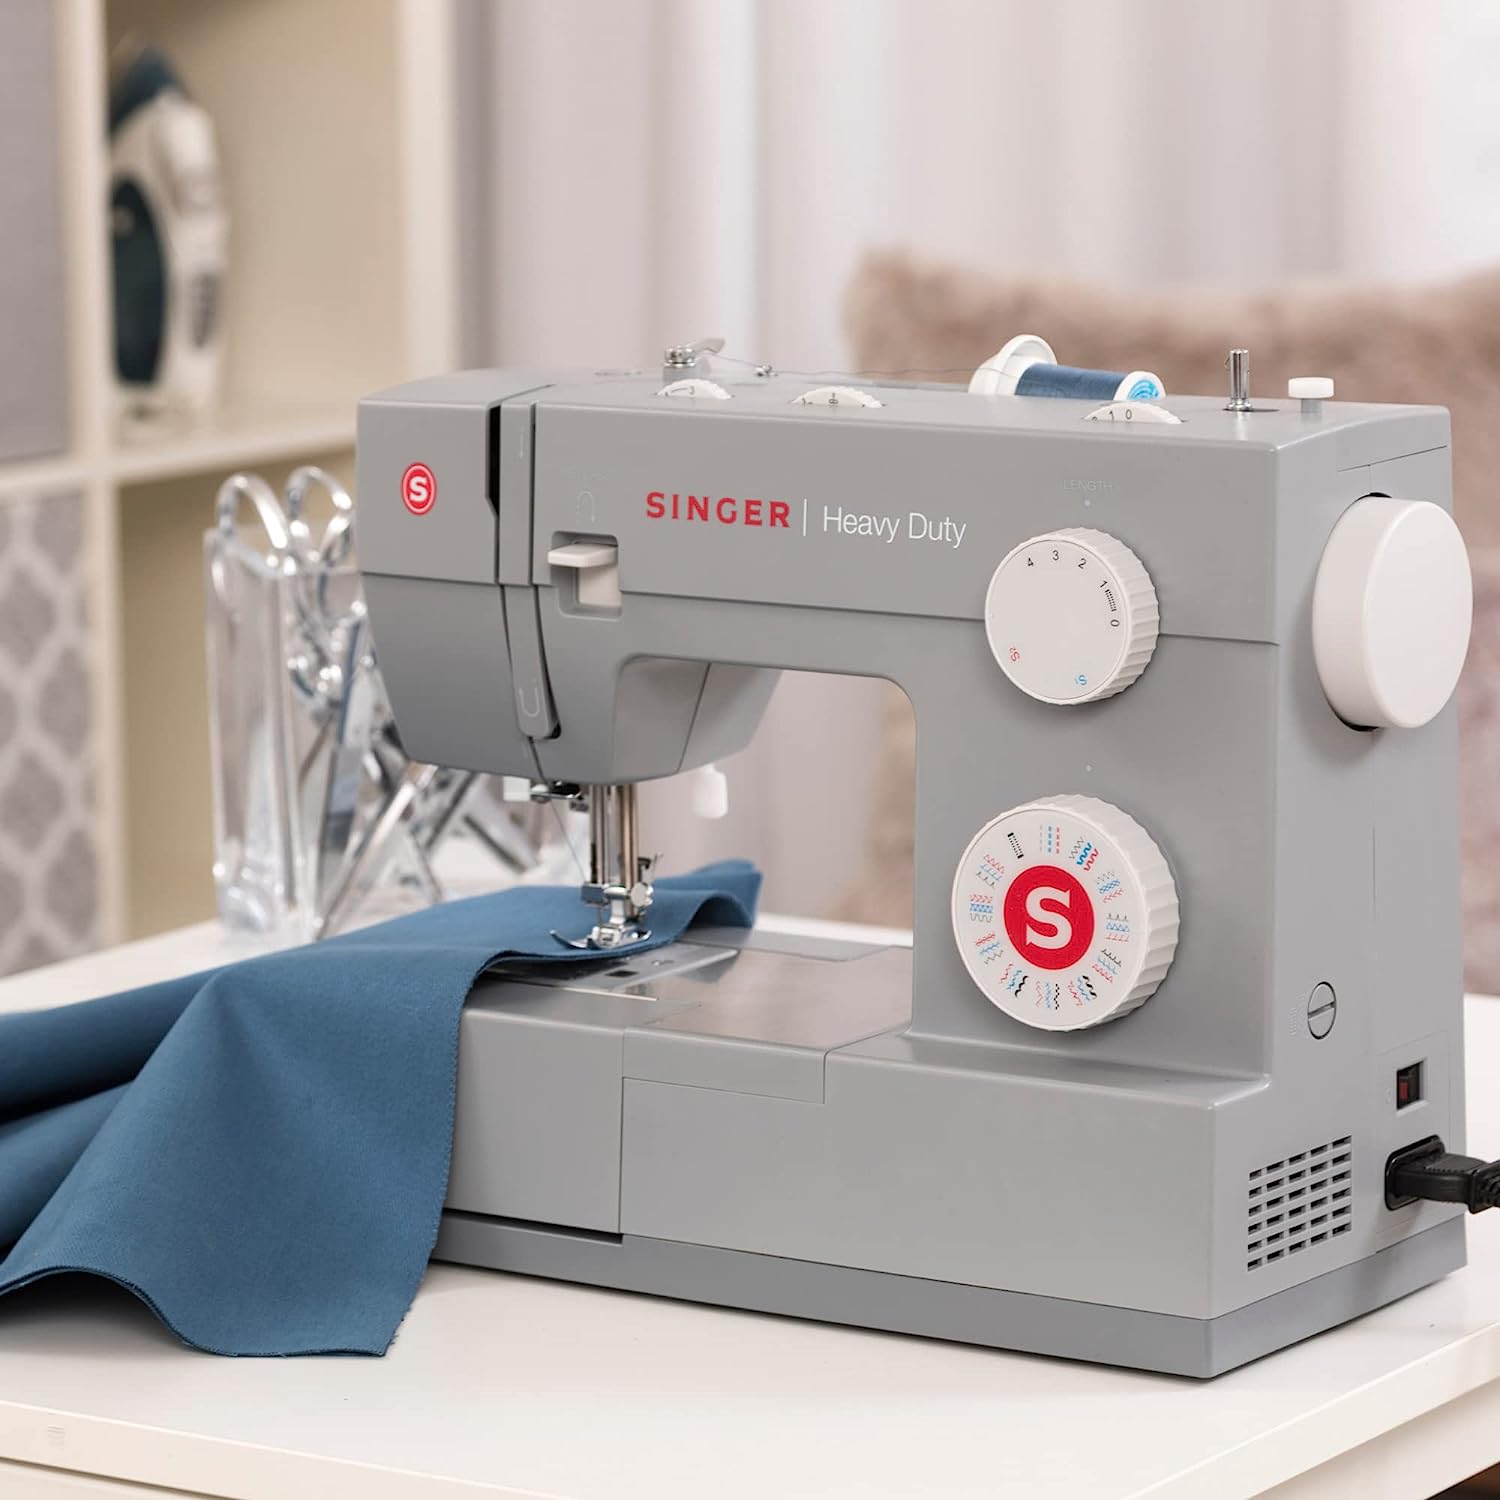 SINGER Heavy Duty 4452 sewing machine best afordalbe sewing machine for beginners best cheap sewing machines